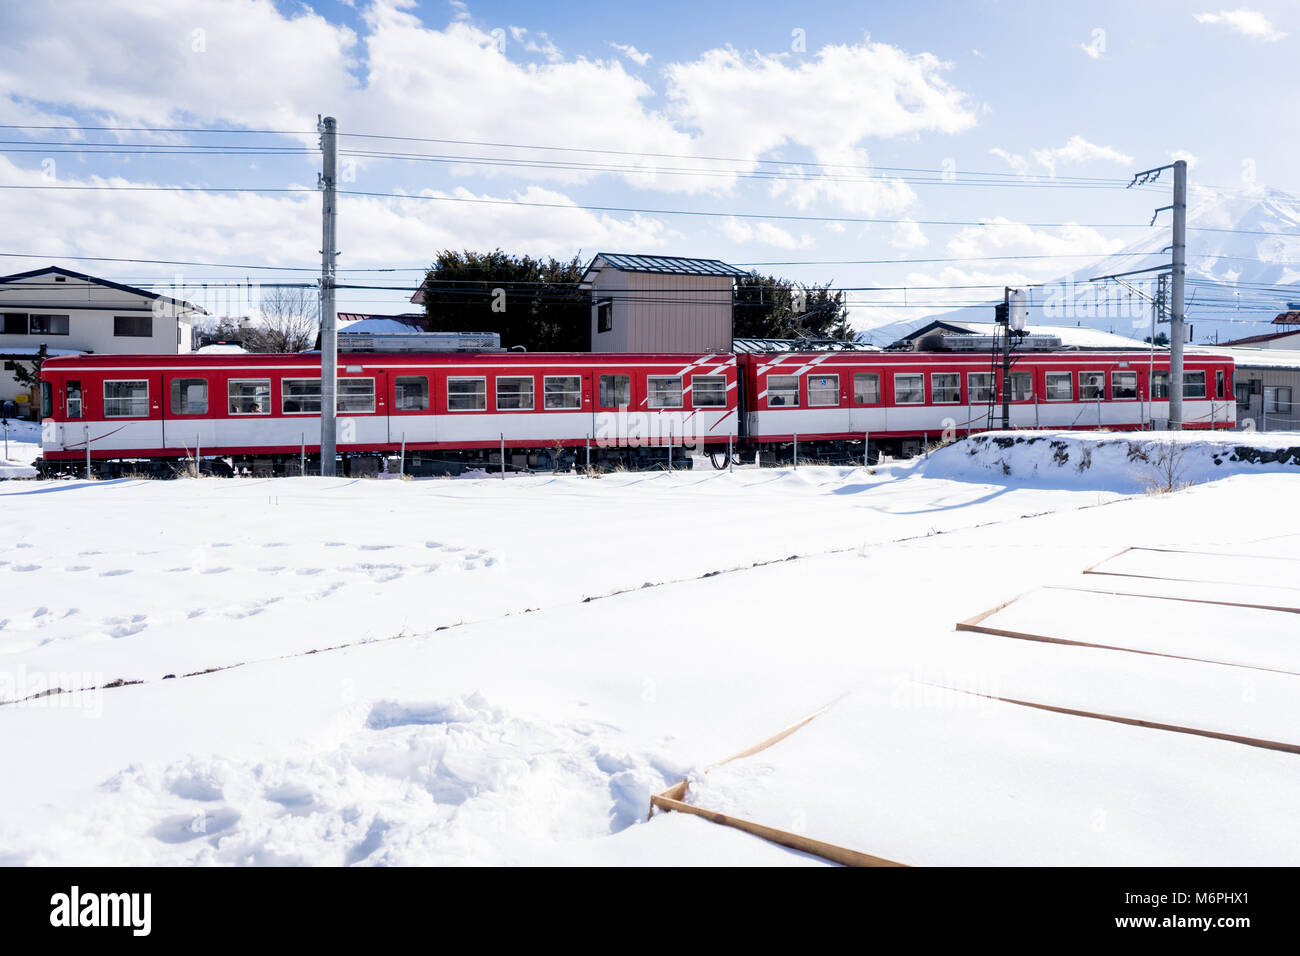 Japan Railways. It's very convenient way for visitors to travel around Kawaguchi, Japan. Stock Photo